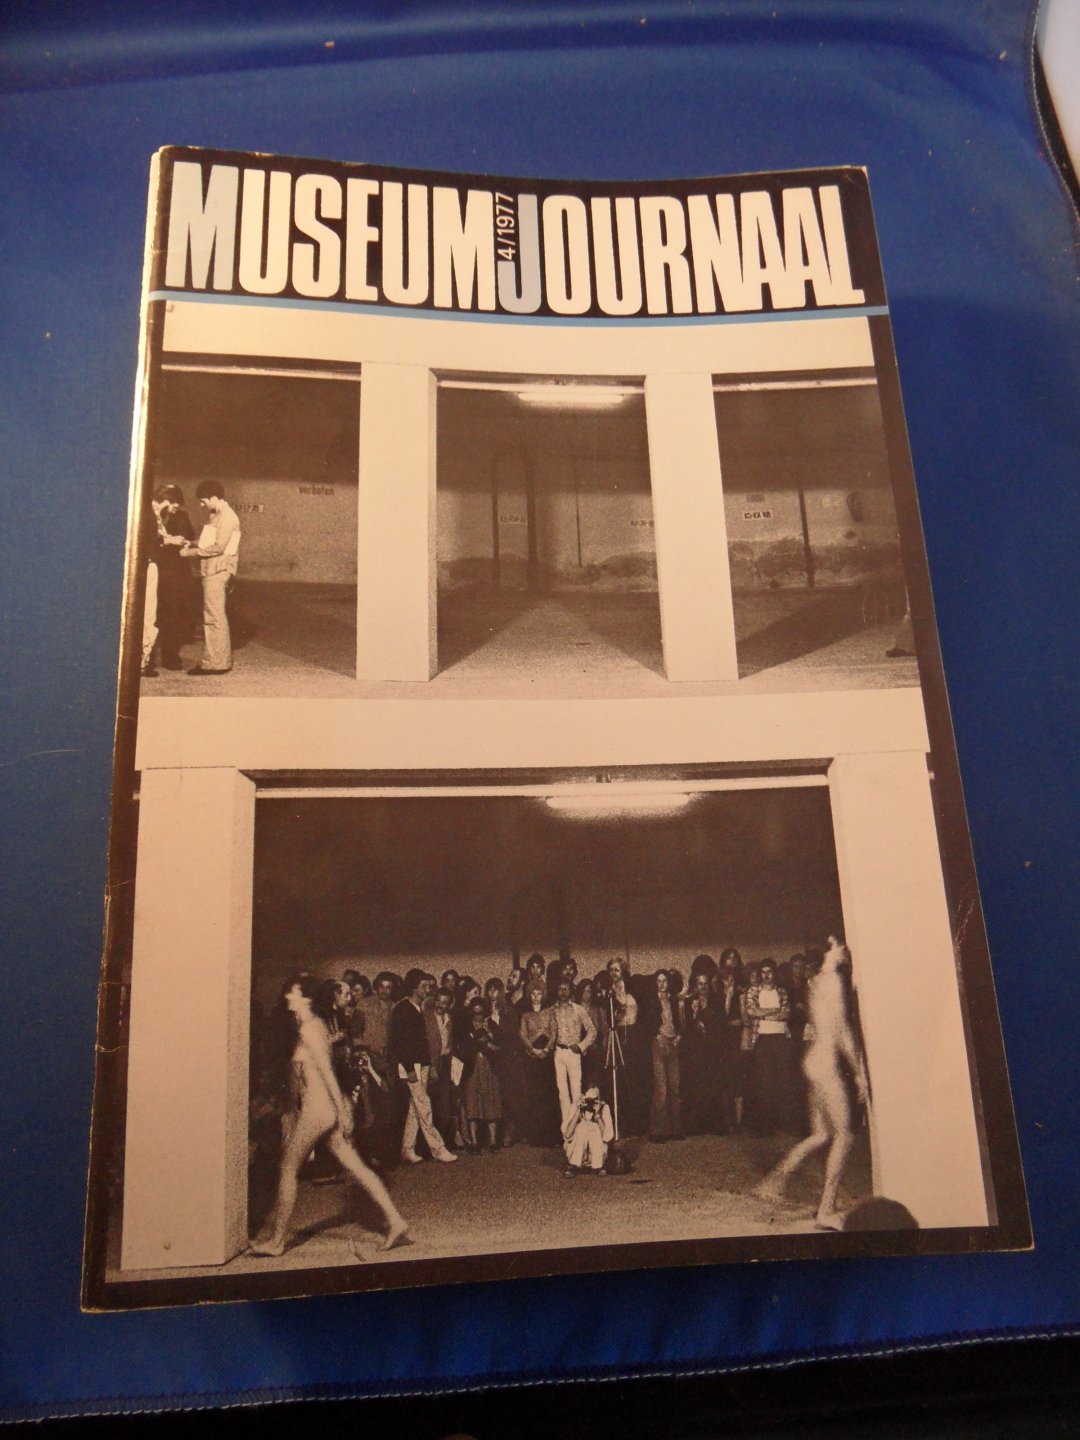 Museumjournaal - Museumjournaal serie 22: no. 1, 2, 4